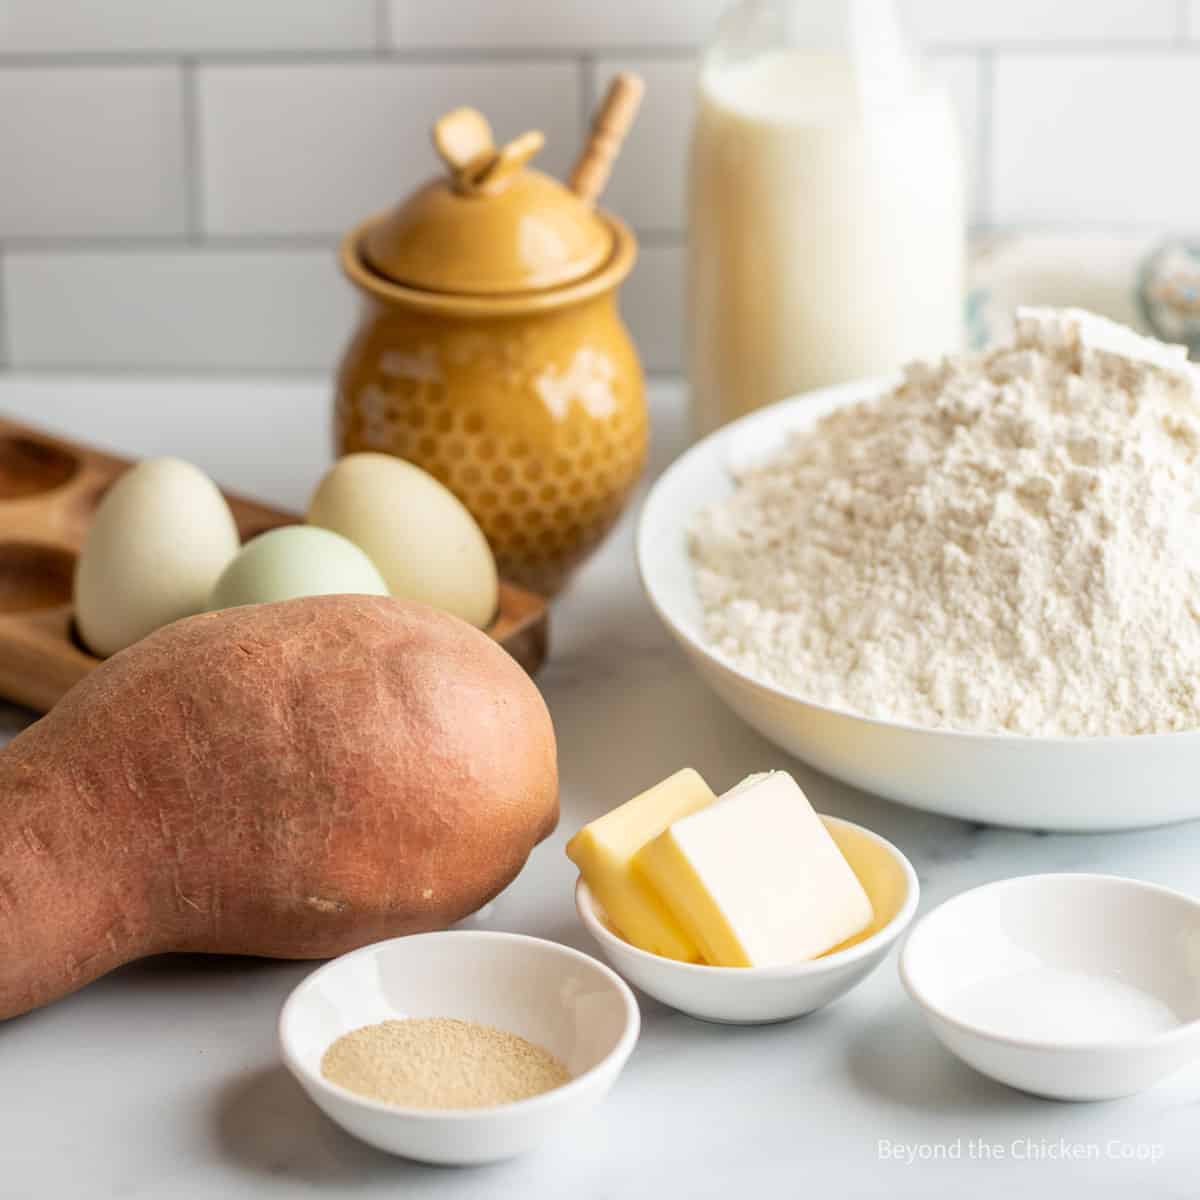 Ingredients for making sweet potato rolls. 